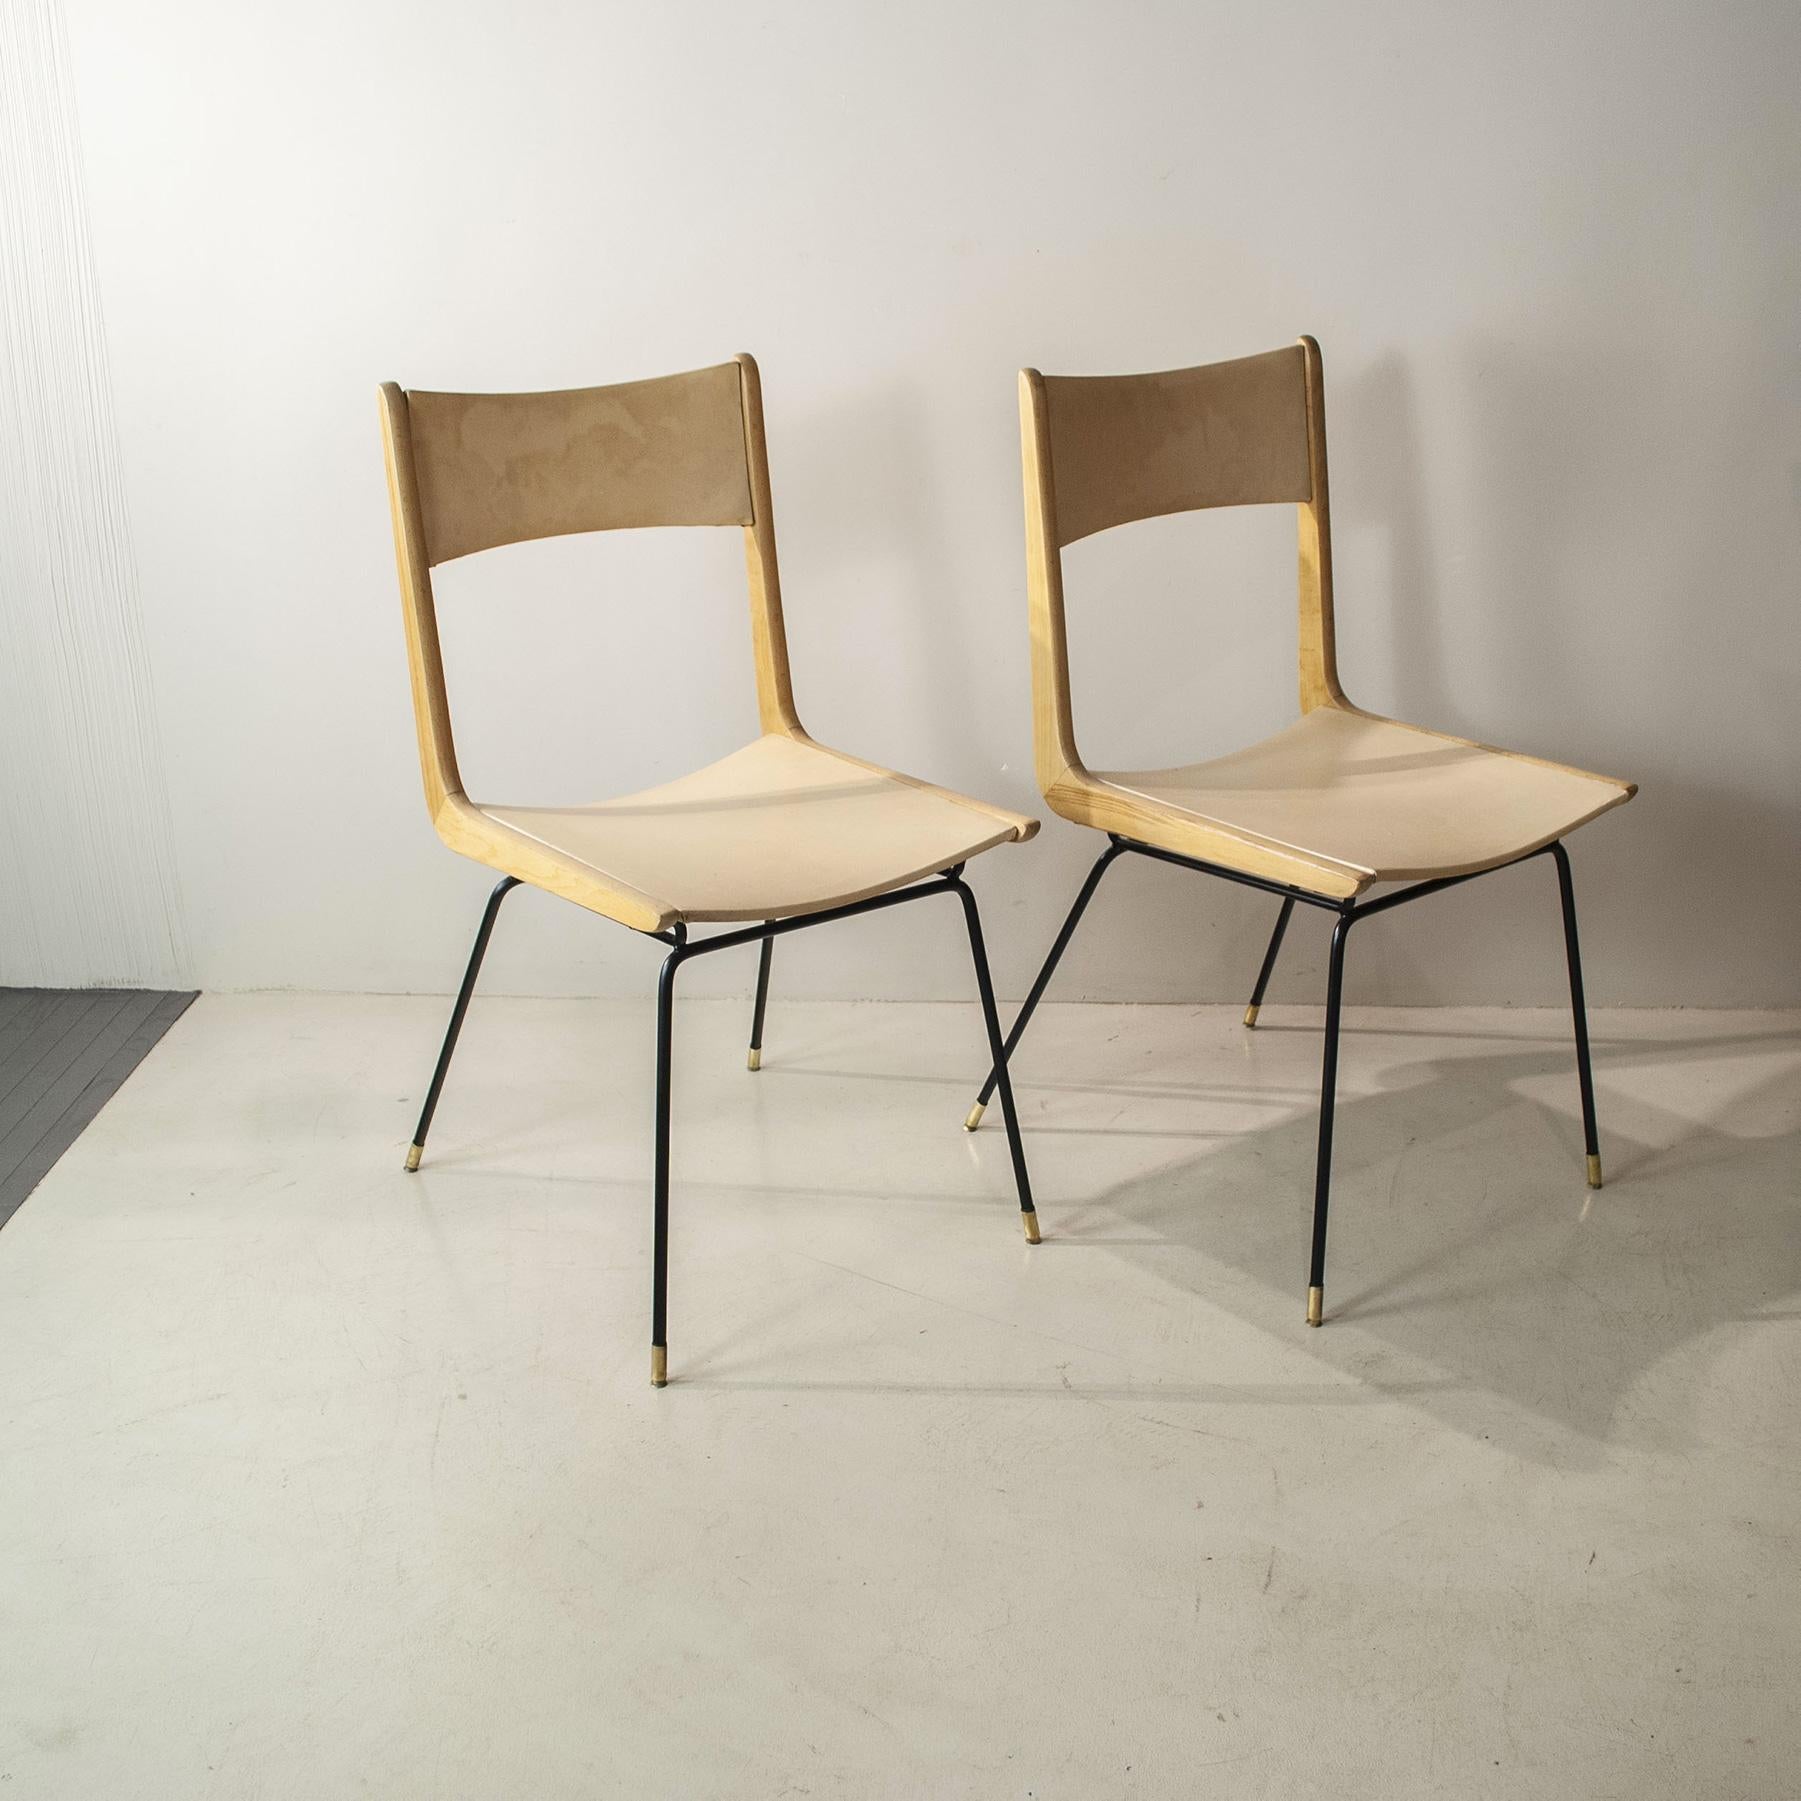 Italian midcentury chair Boomerang model by Carlo De Carli designer.